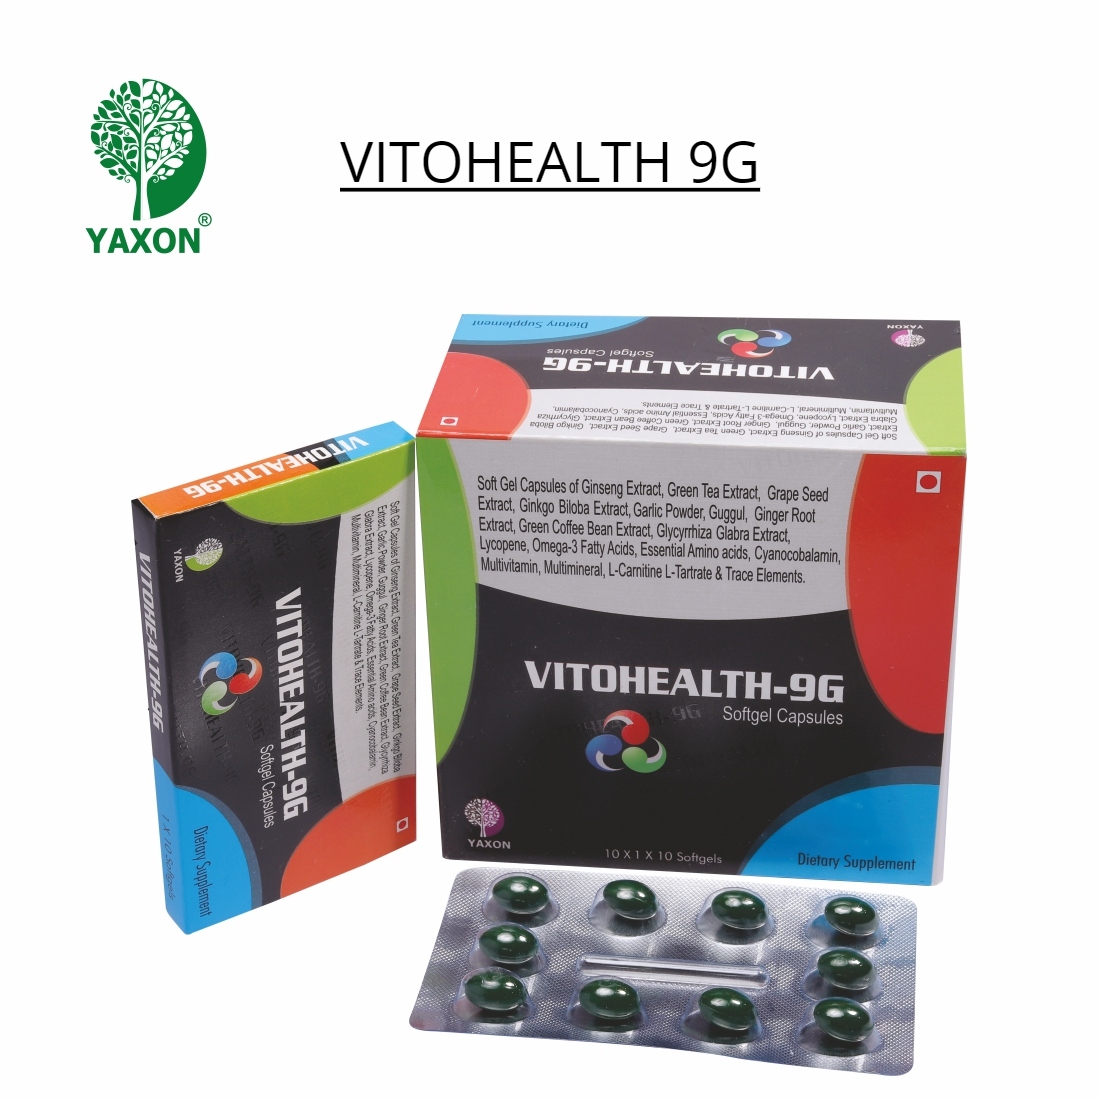 YAXON VITOHEALTH 9G Softgel Capsules